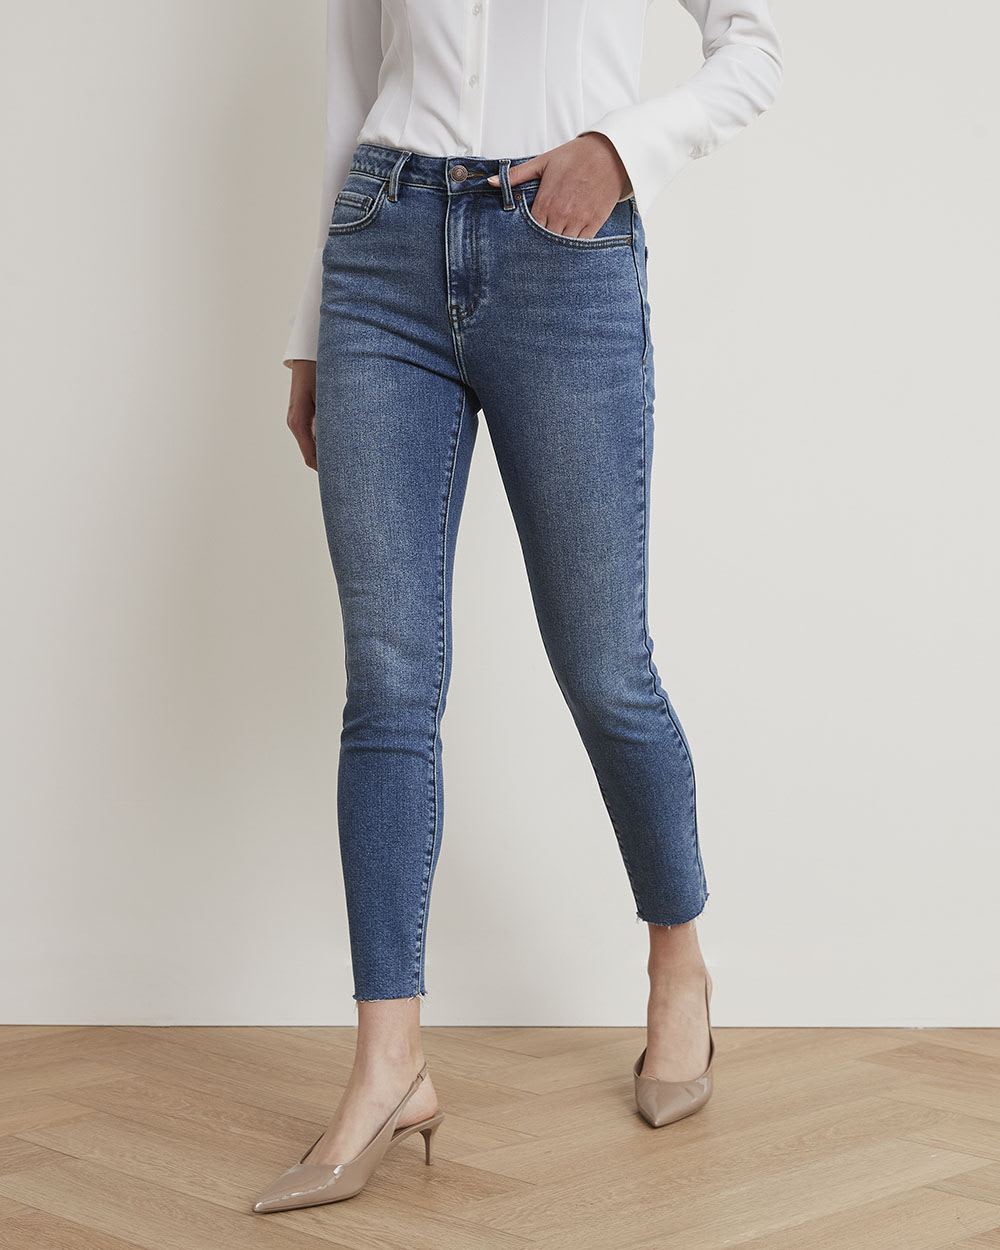 Vintage Medium-Wash High-Waisted Skinny Jeans - 28"